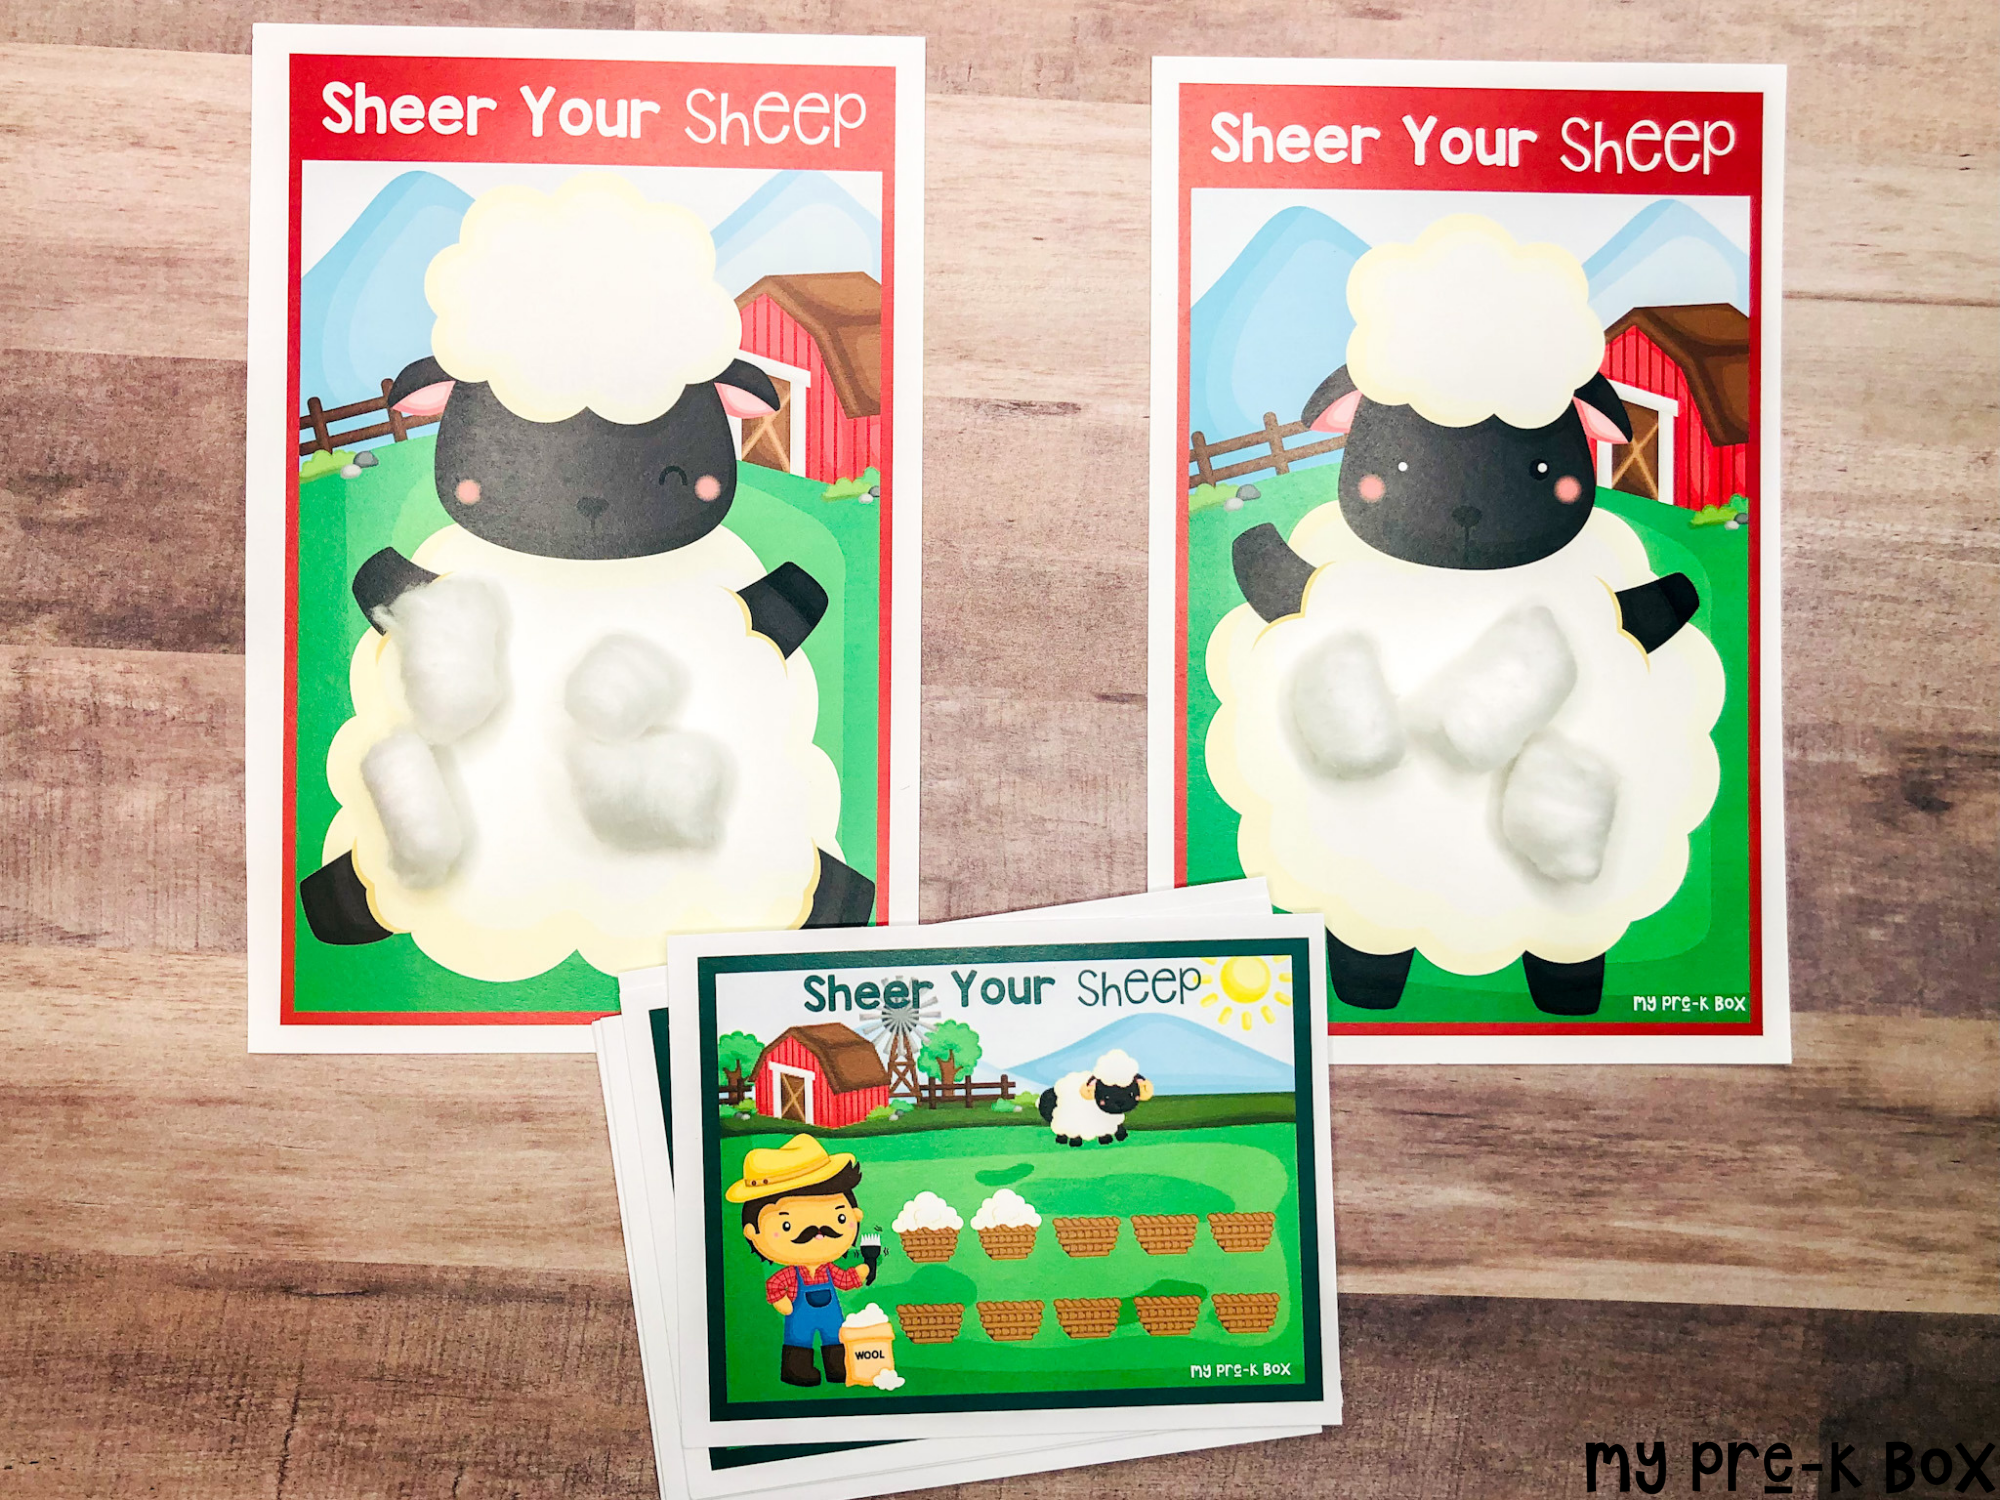 Sheer Your Sheep Farm Box Game for Preschoolers